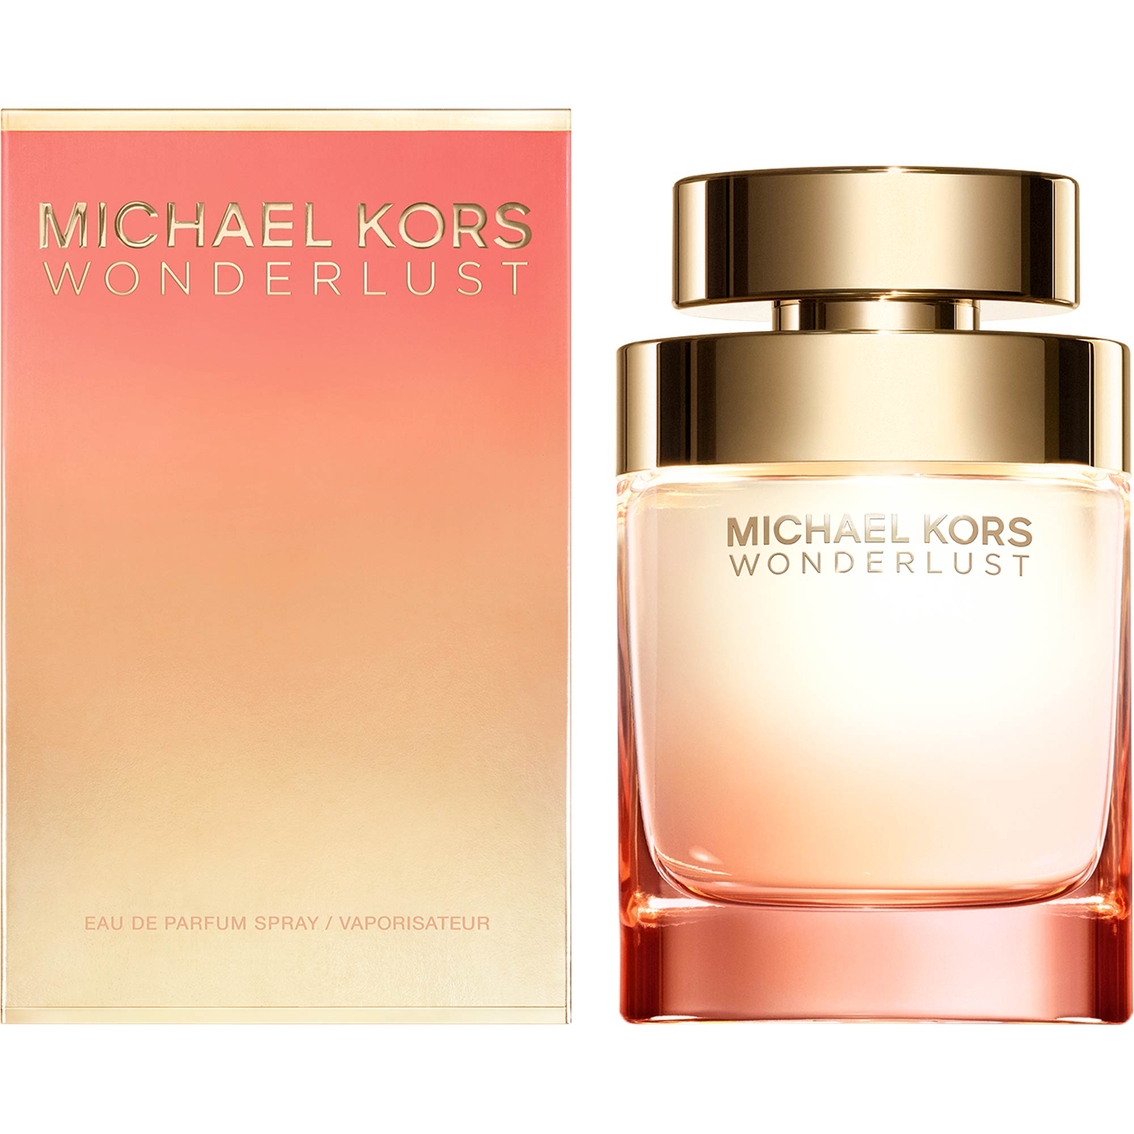 Michael Kors Wonderlust for Women Eau De Parfum Spray - Image 2 of 2